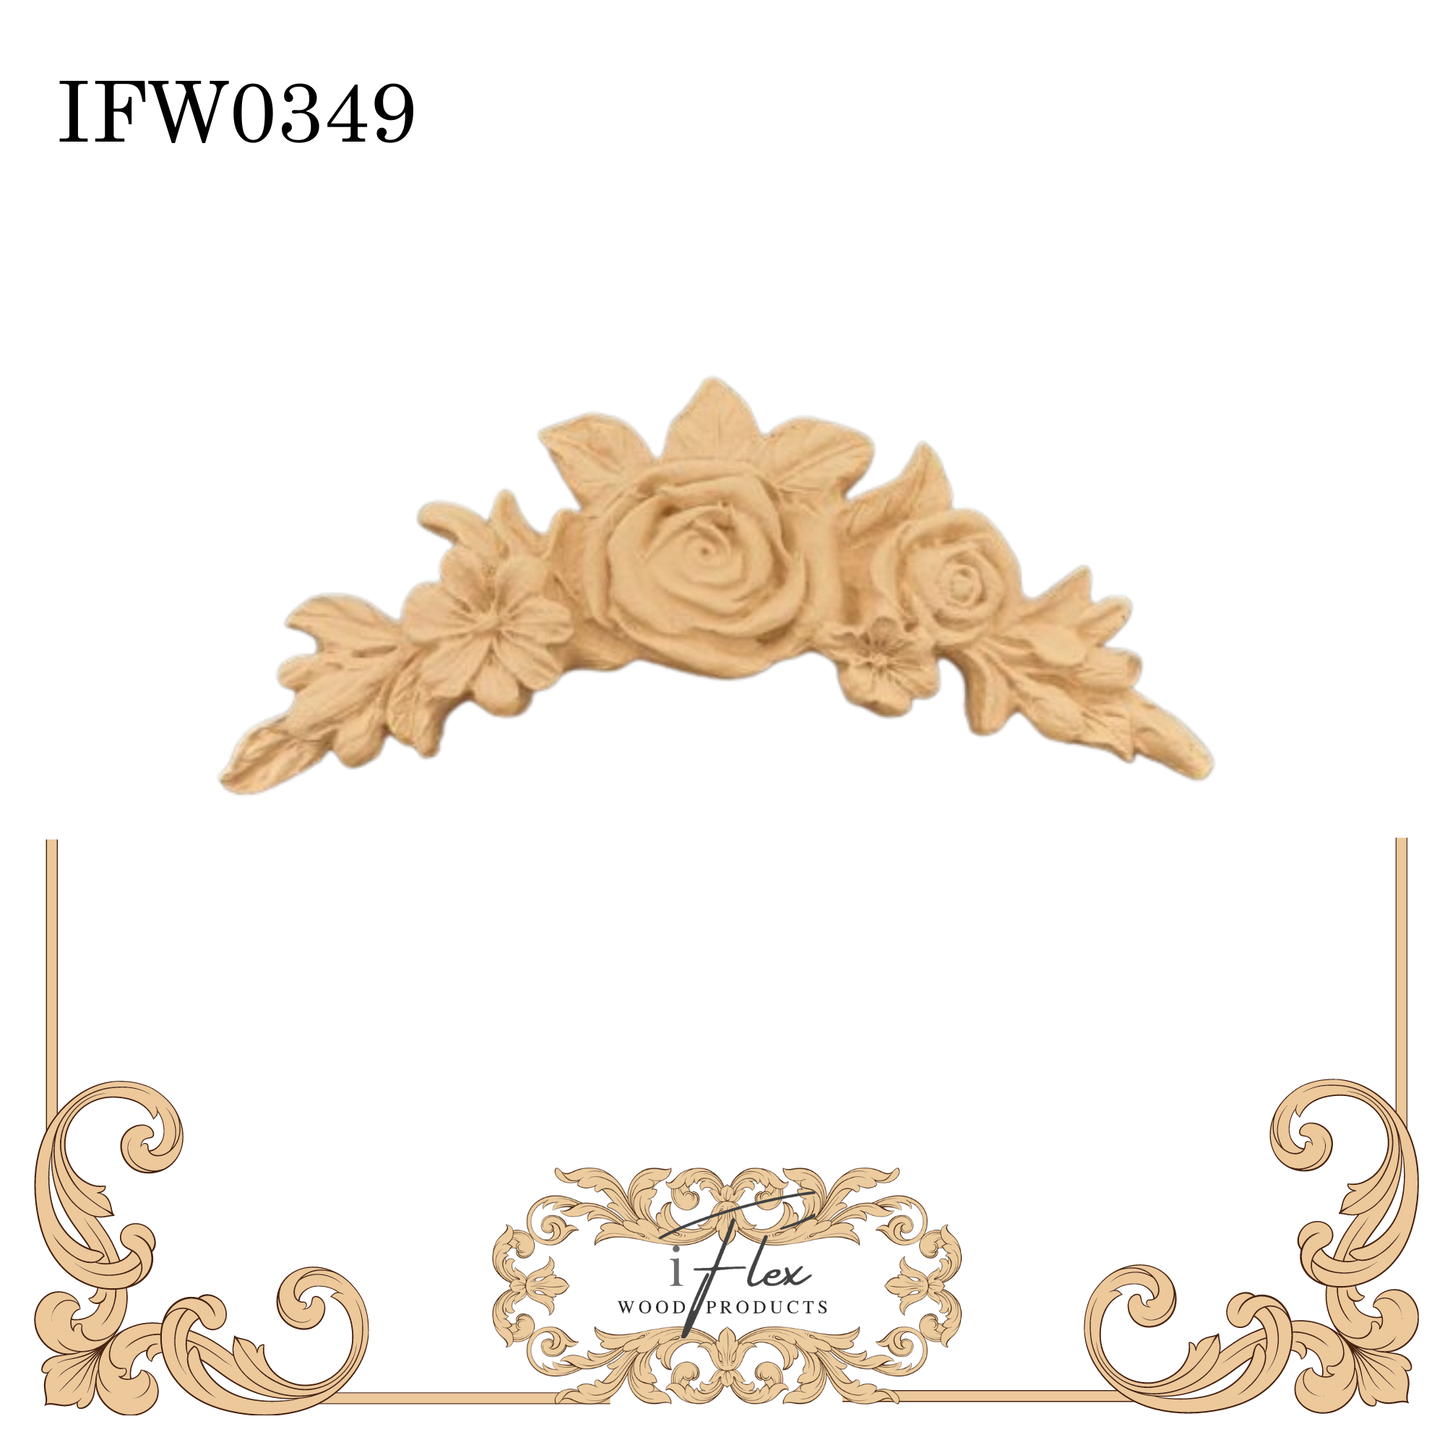 IFW 0349  iFlex Wood Products Flower, Garland Flexible Pliable Embellishment